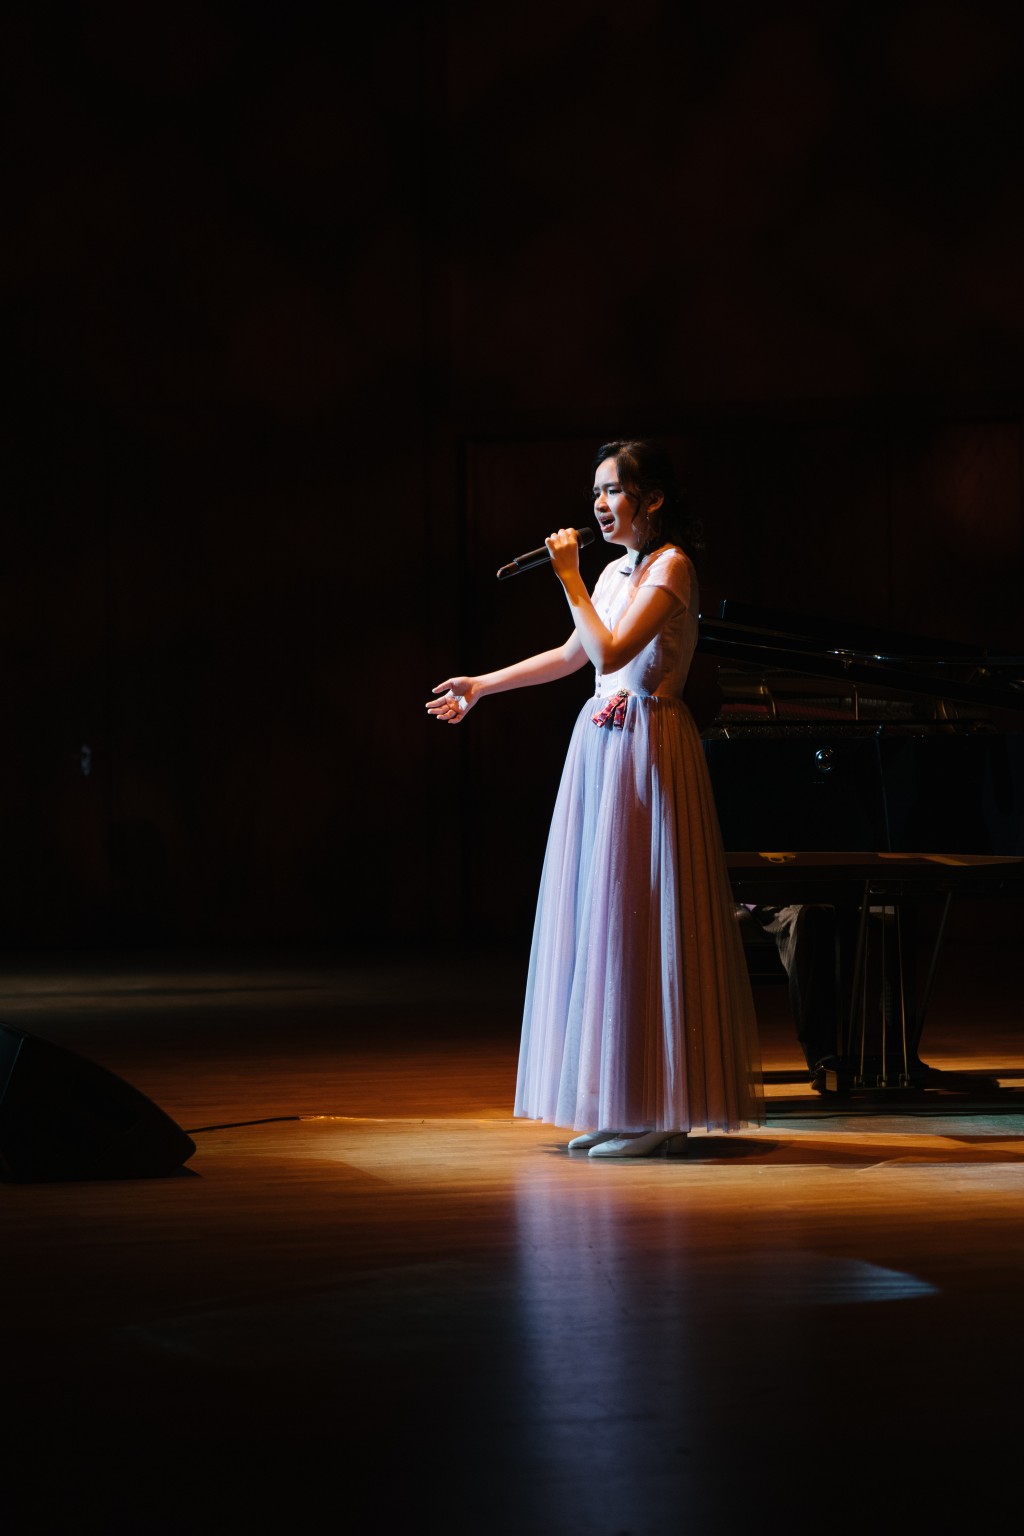 Michelle多次获得钢琴和歌唱比赛奖项，2020年更获选香港十大杰出青年